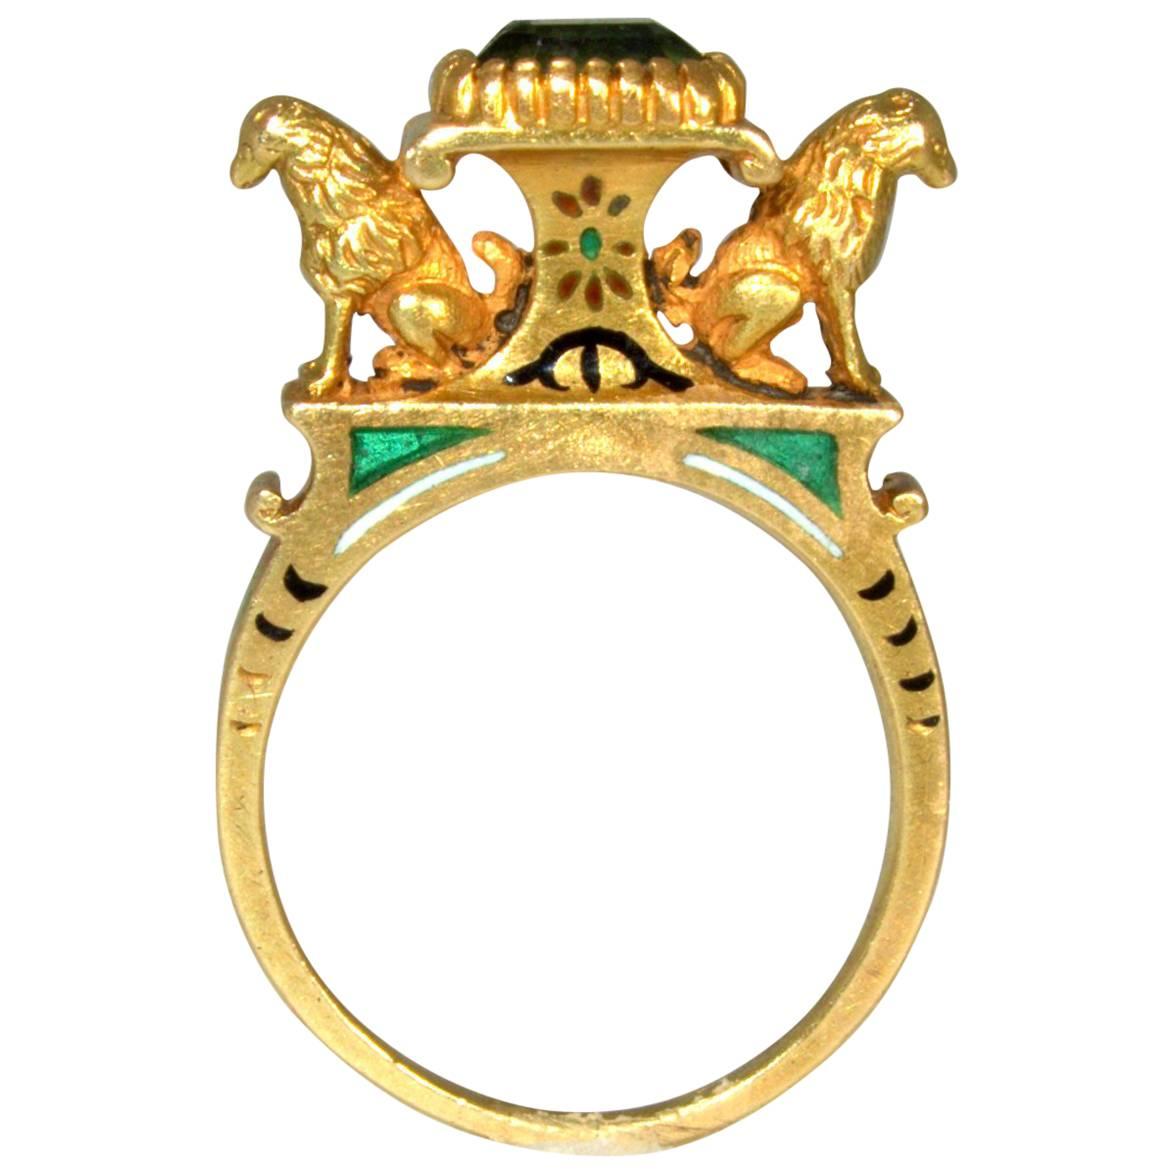 Antique French Renaissance Revival Enamel Gold Ring